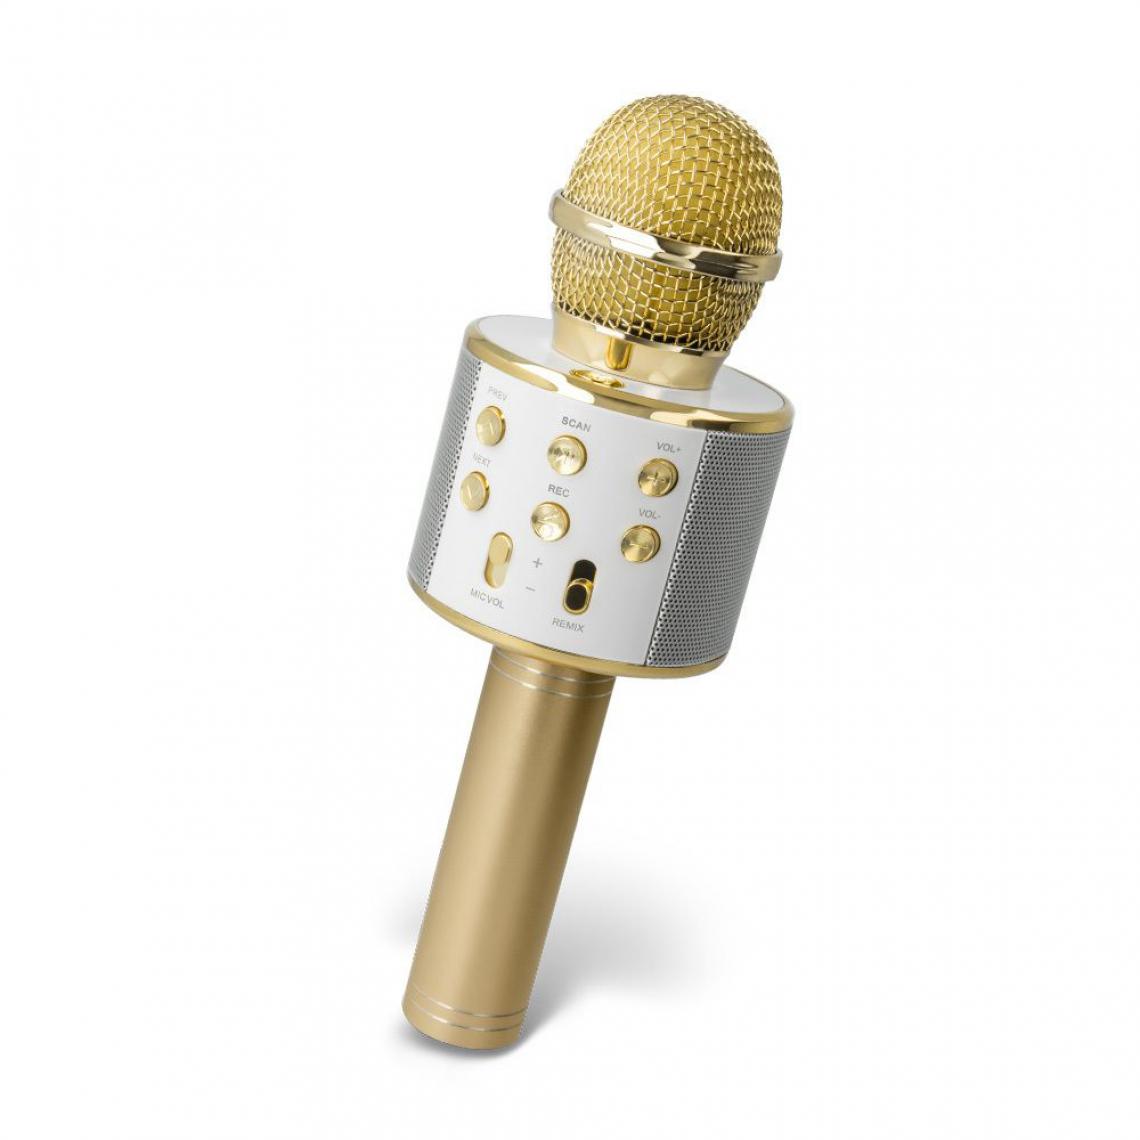 Ozzzo - Microphone Karaoke bluetooth haut parleur ozzzo Gold Or pour LG Stylo G5 - Autres accessoires smartphone